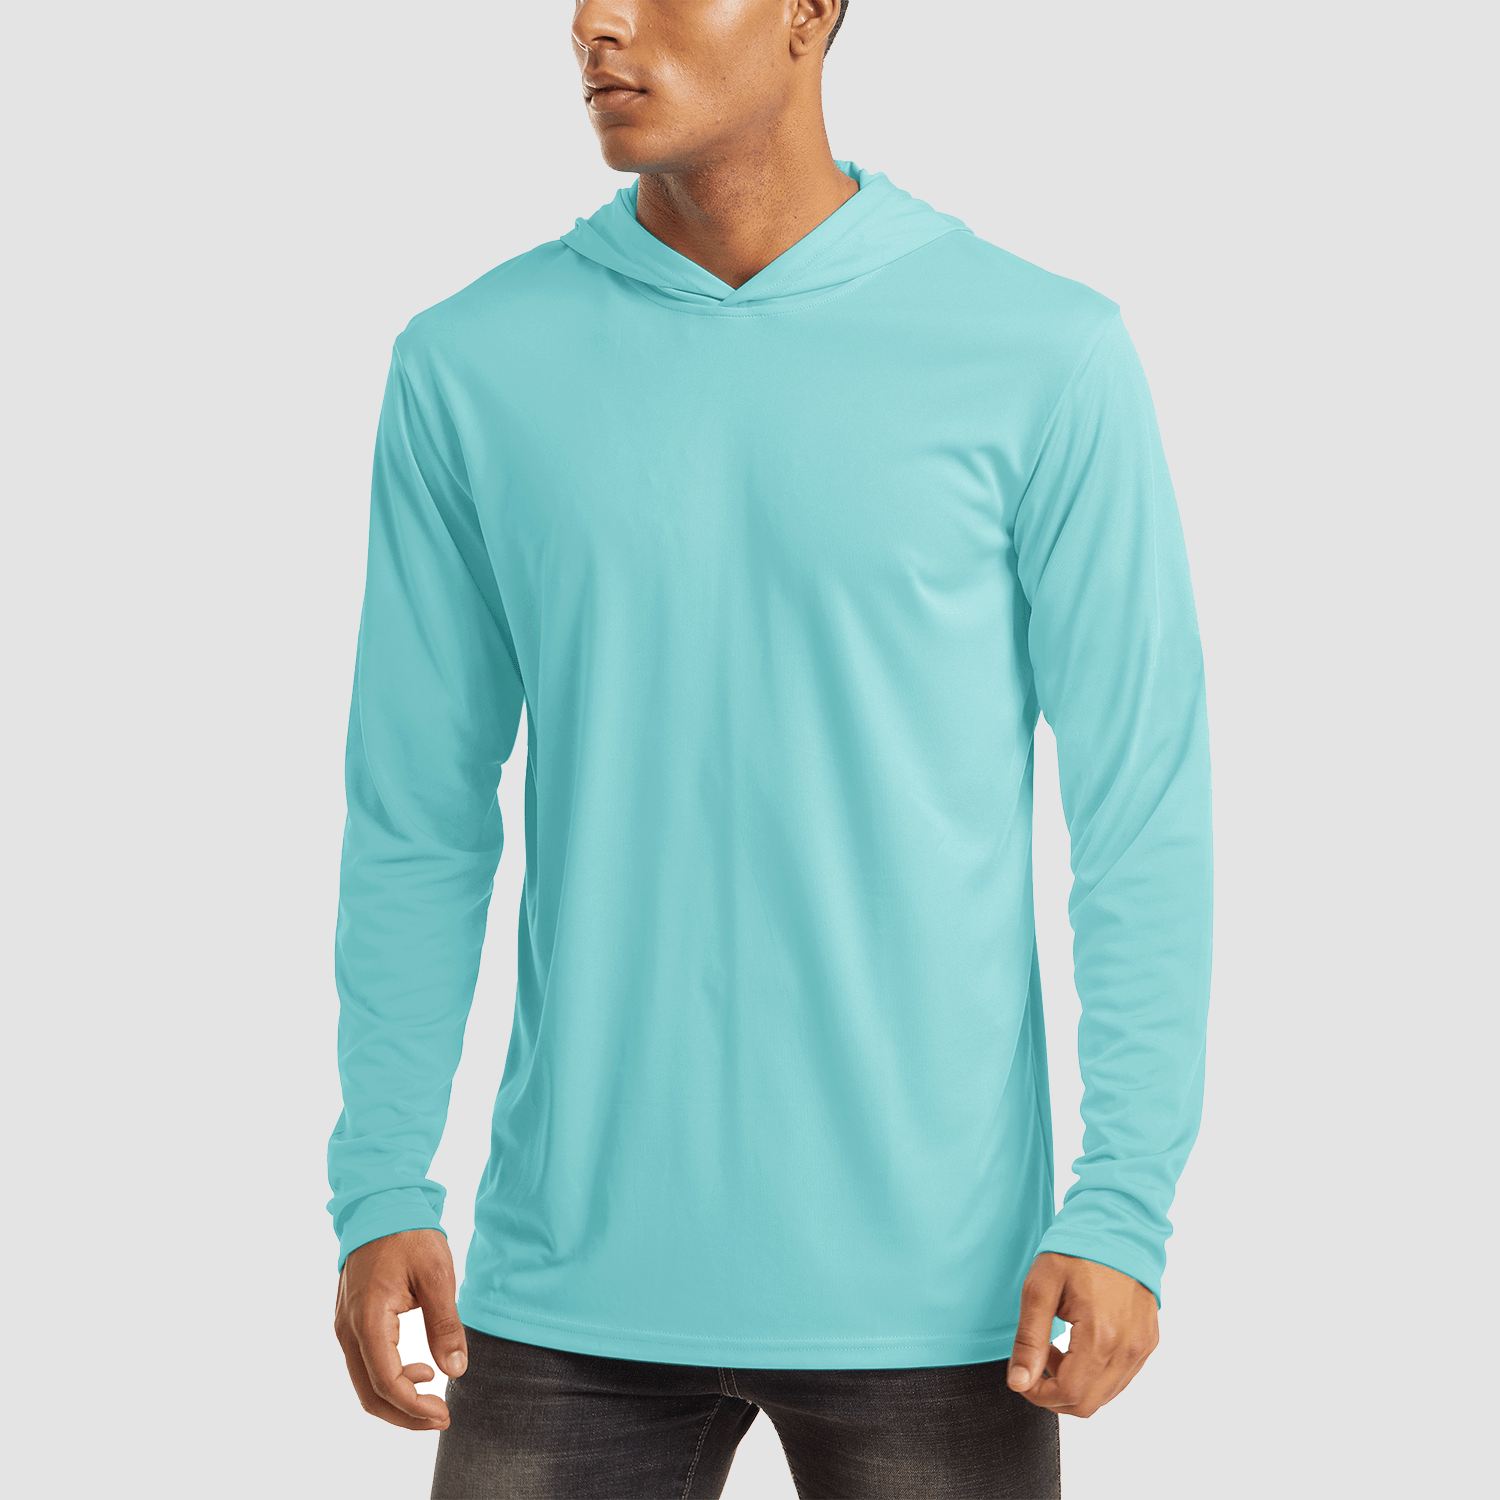 【Buy 4 Get 4th Free】Men's Long Sleeve Hooded Shirt UPF 50+ Athletic Shirts, Grey Green / XS